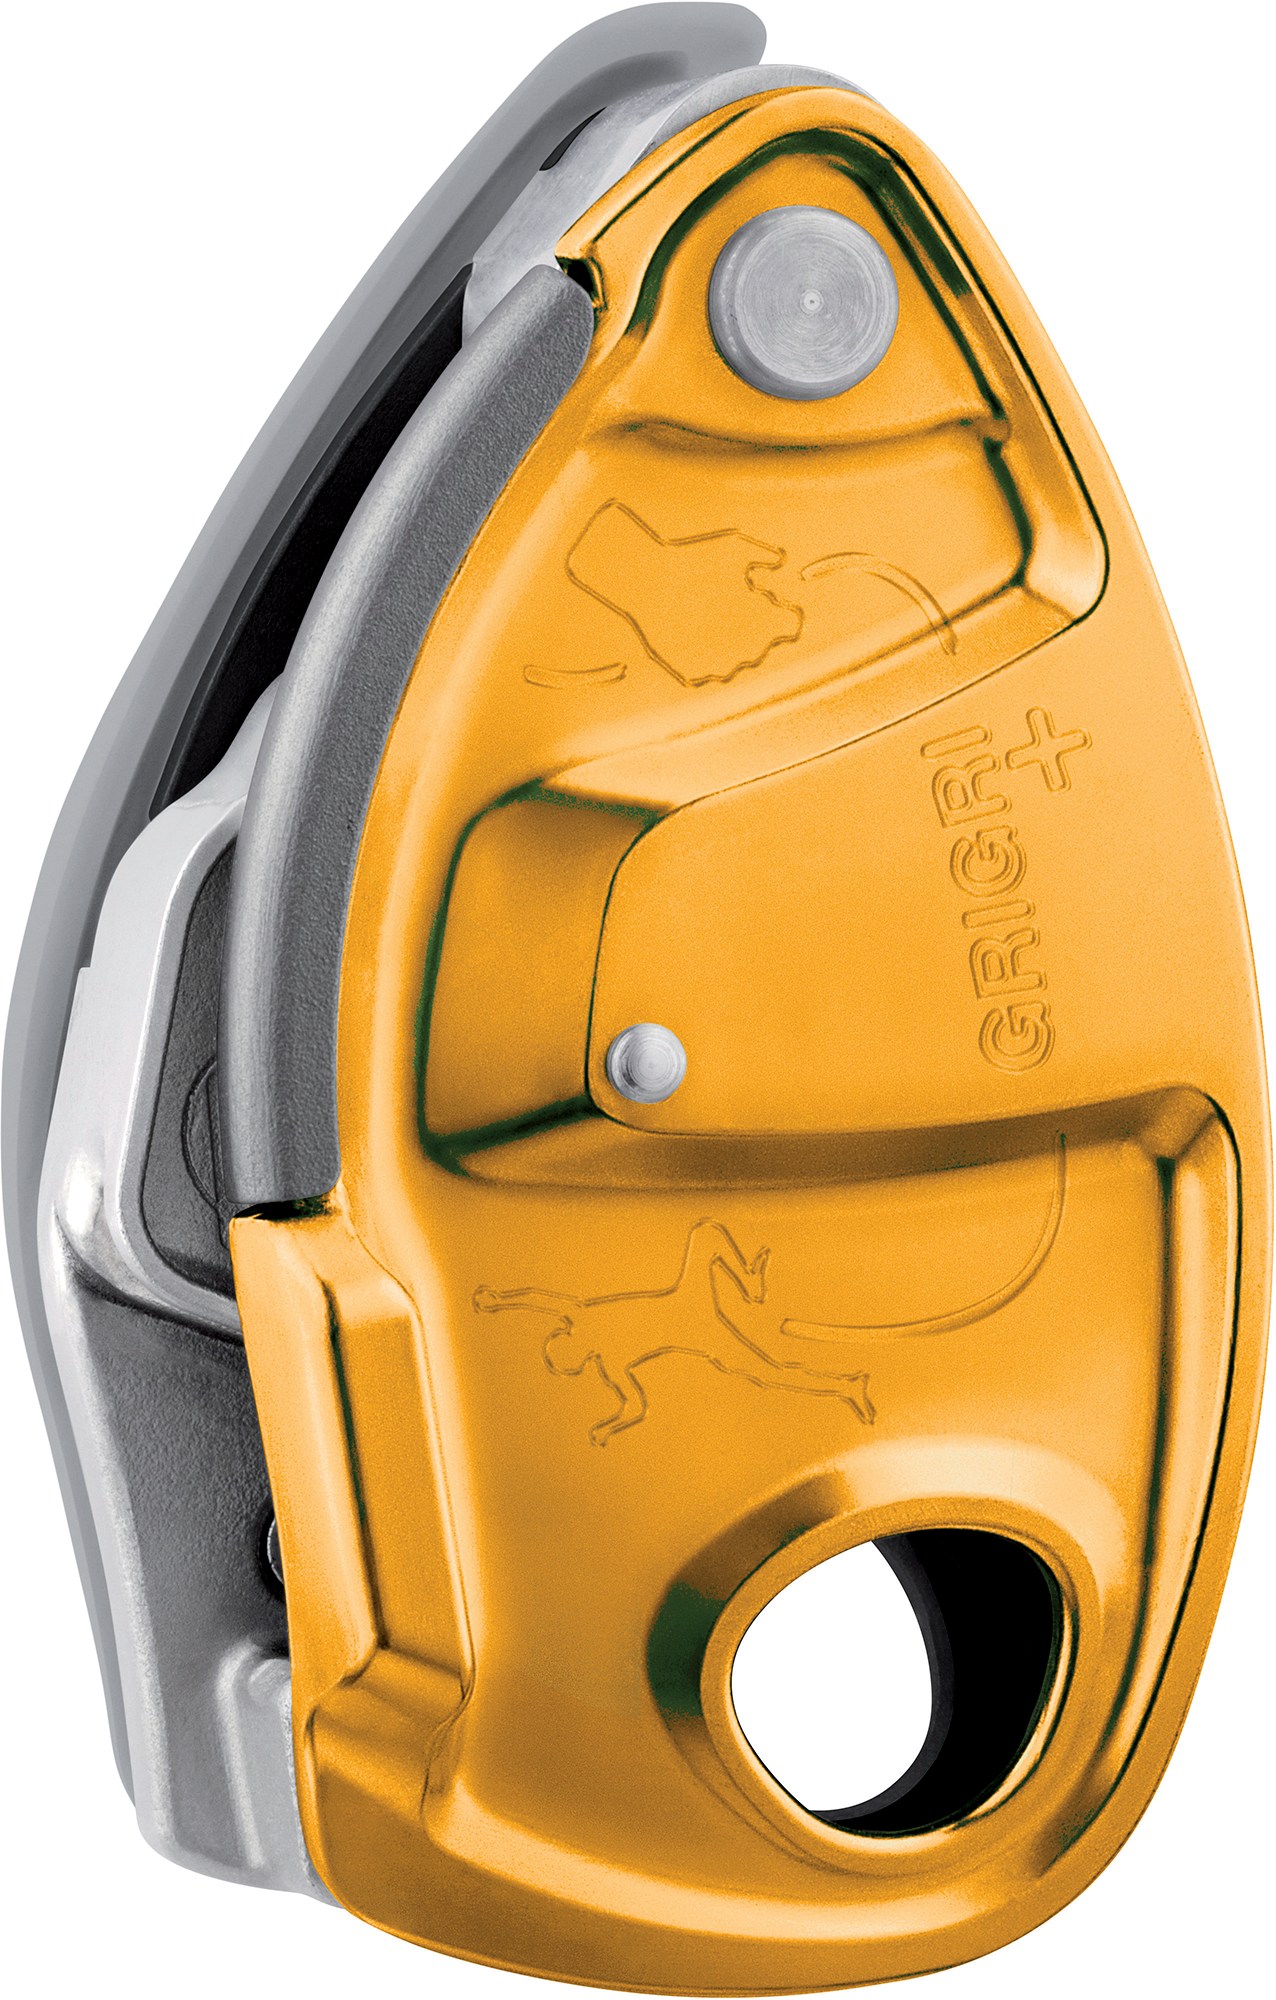 страховочное устройство asap lock petzl ГРИГРИ + Страховочное устройство Petzl, оранжевый